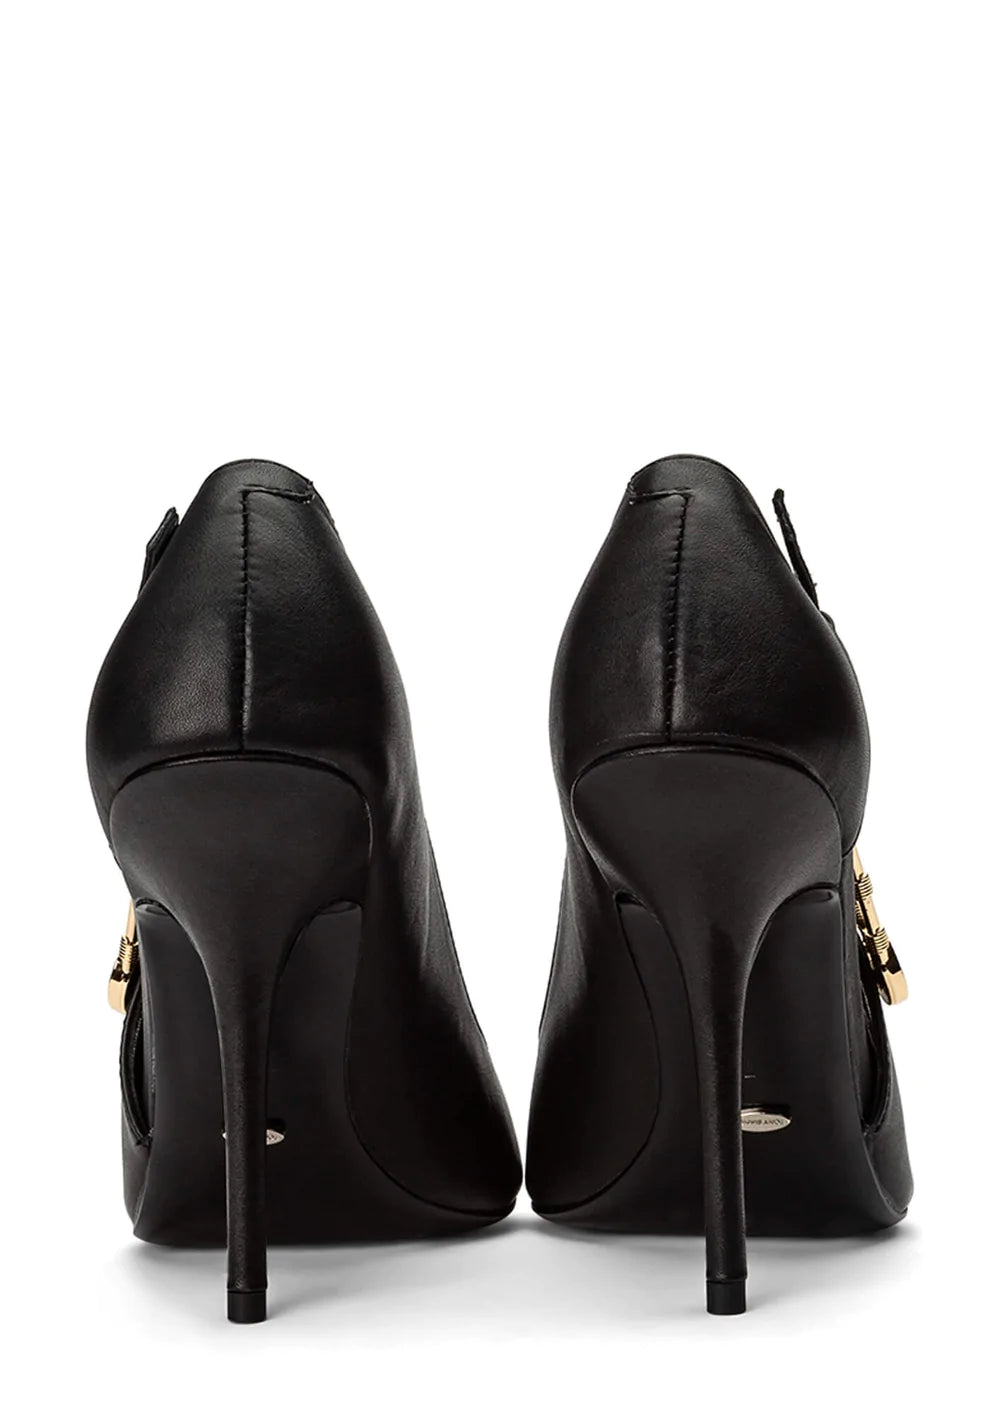 GLOW PUMP - TONY BIANCO - 10, 5, 6, 6.5, 7, 7.5, 8, 8.5, 9, BLACK, skin, womens footwear - Stomp Shoes Darwin